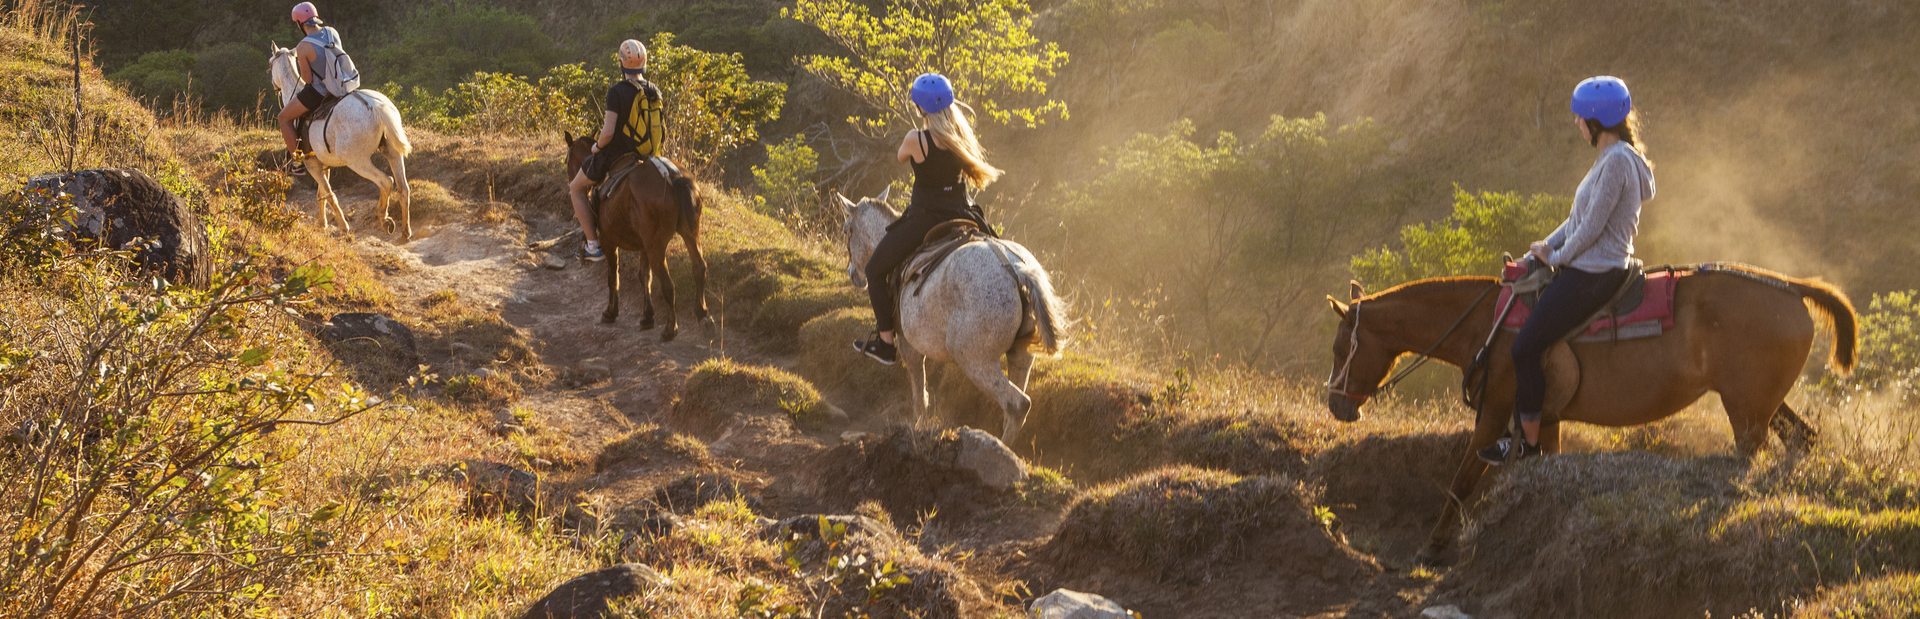 Wilderness ride on horseback Image 1